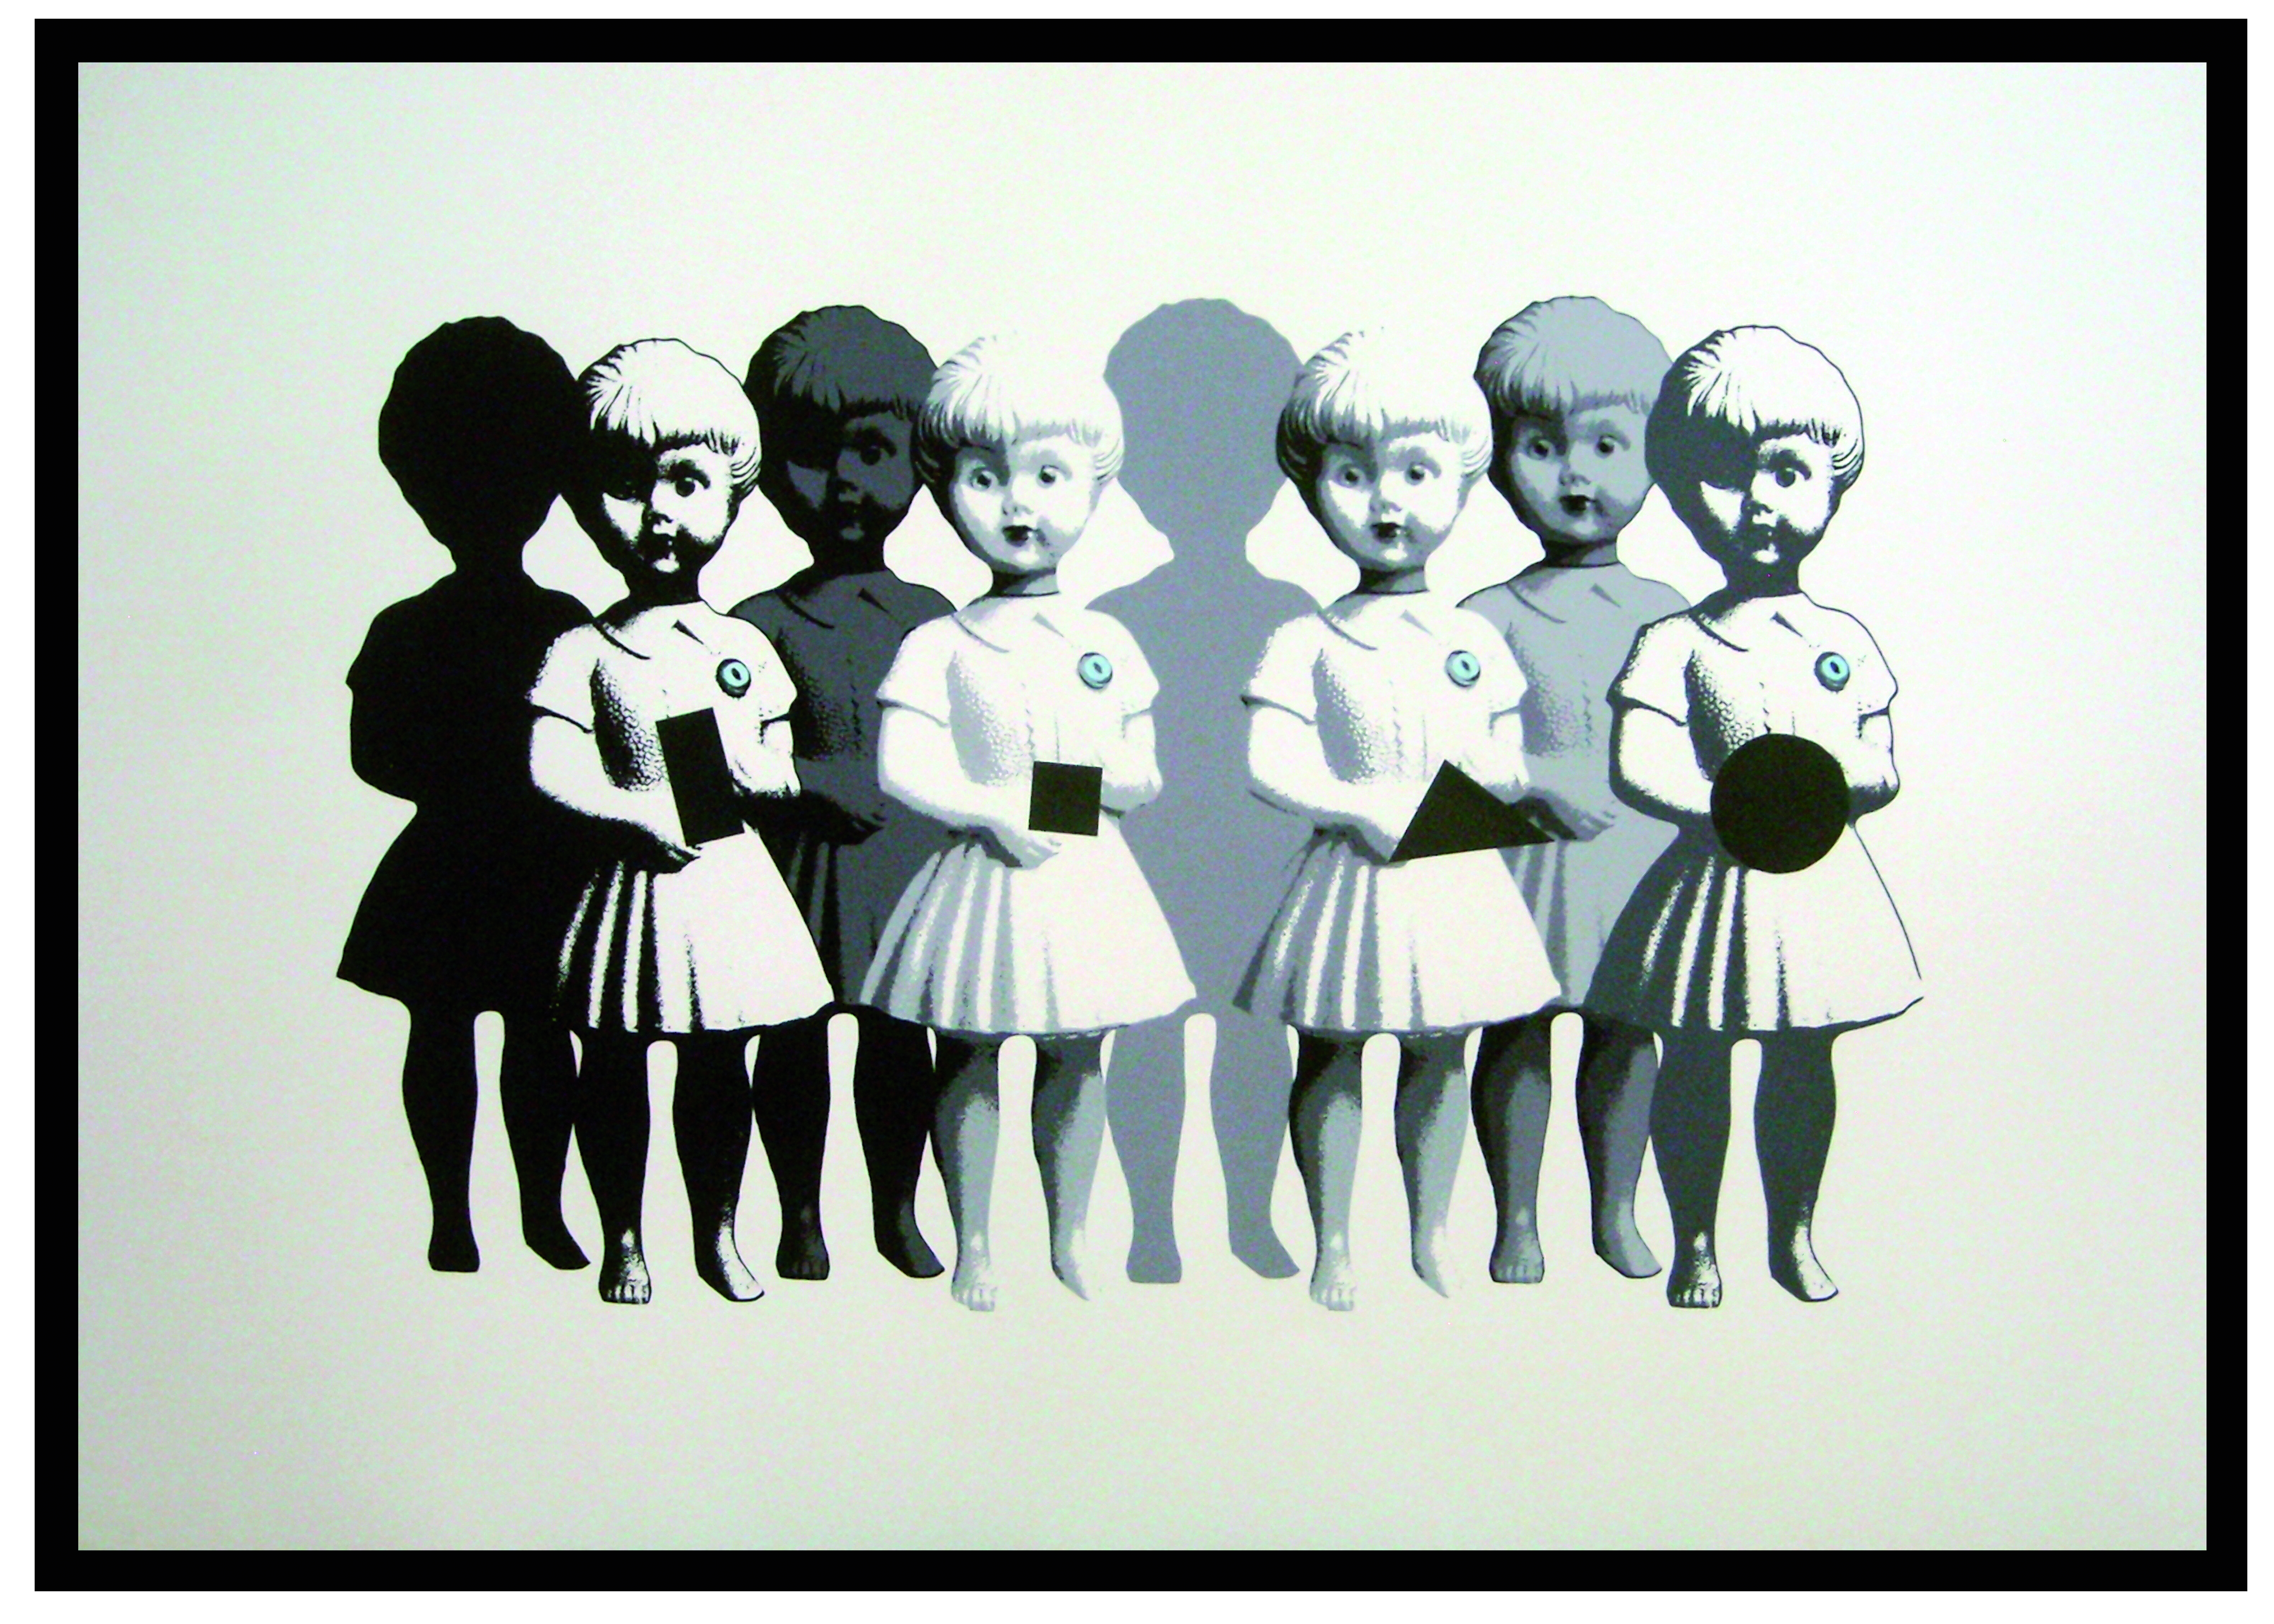 Niñas Argentinas,  50 cm x 70 cm, 2010